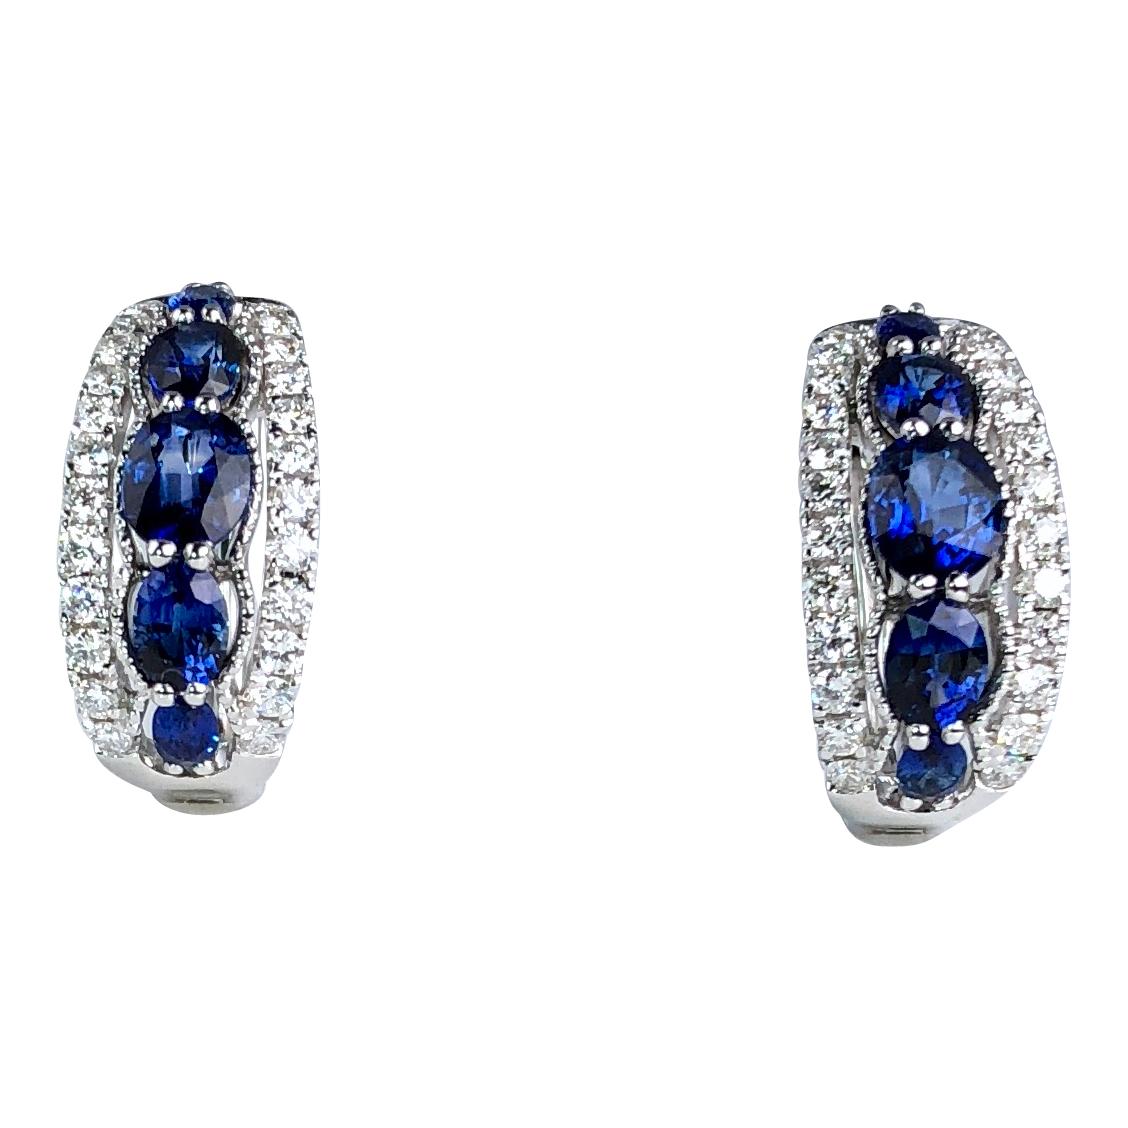 1.94 Carat Blue Sapphire and 0.54 Carat Diamond Hoop Earrings in 18 Karat Gold